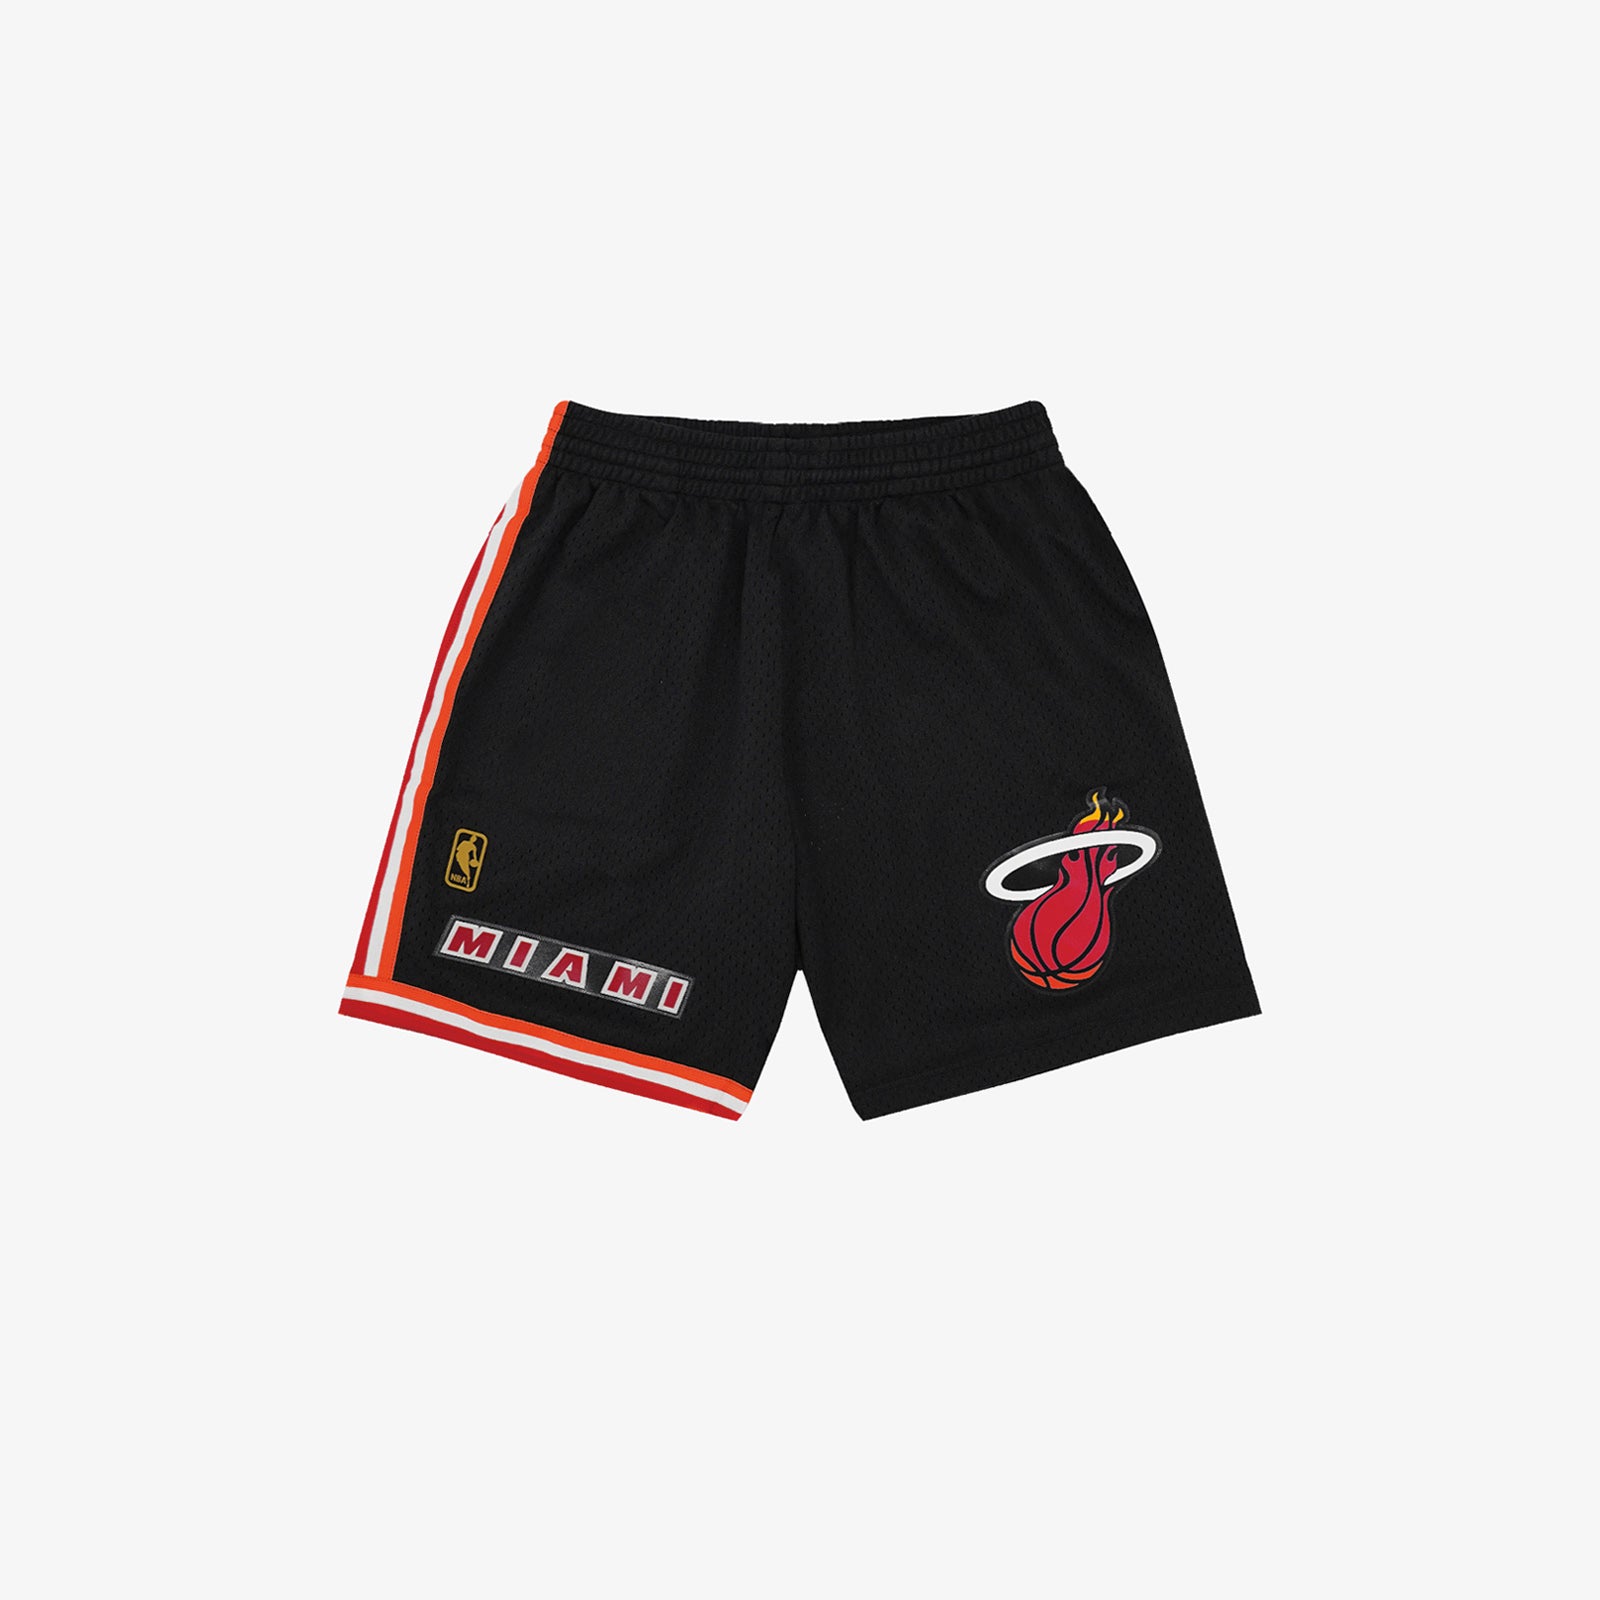 NBA Classics Shorts - Miami Heat '96